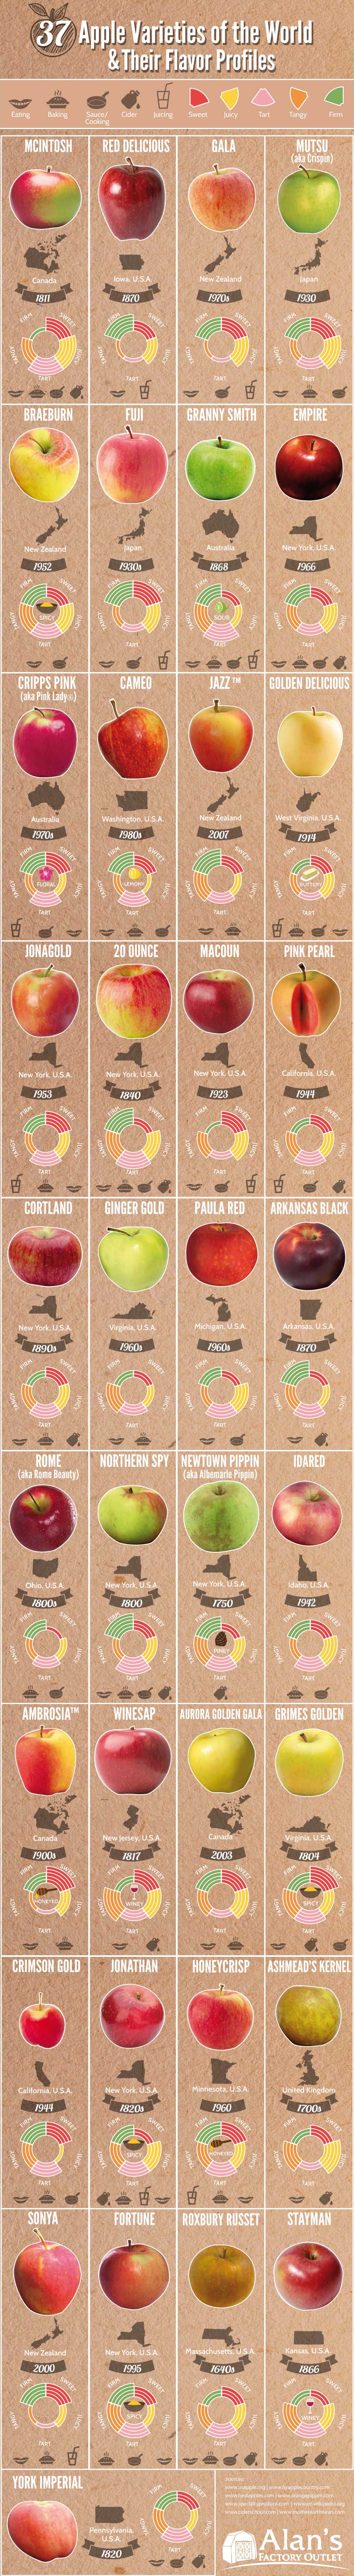 37 Apple Varieties Around the World & Their Flavor Profiles